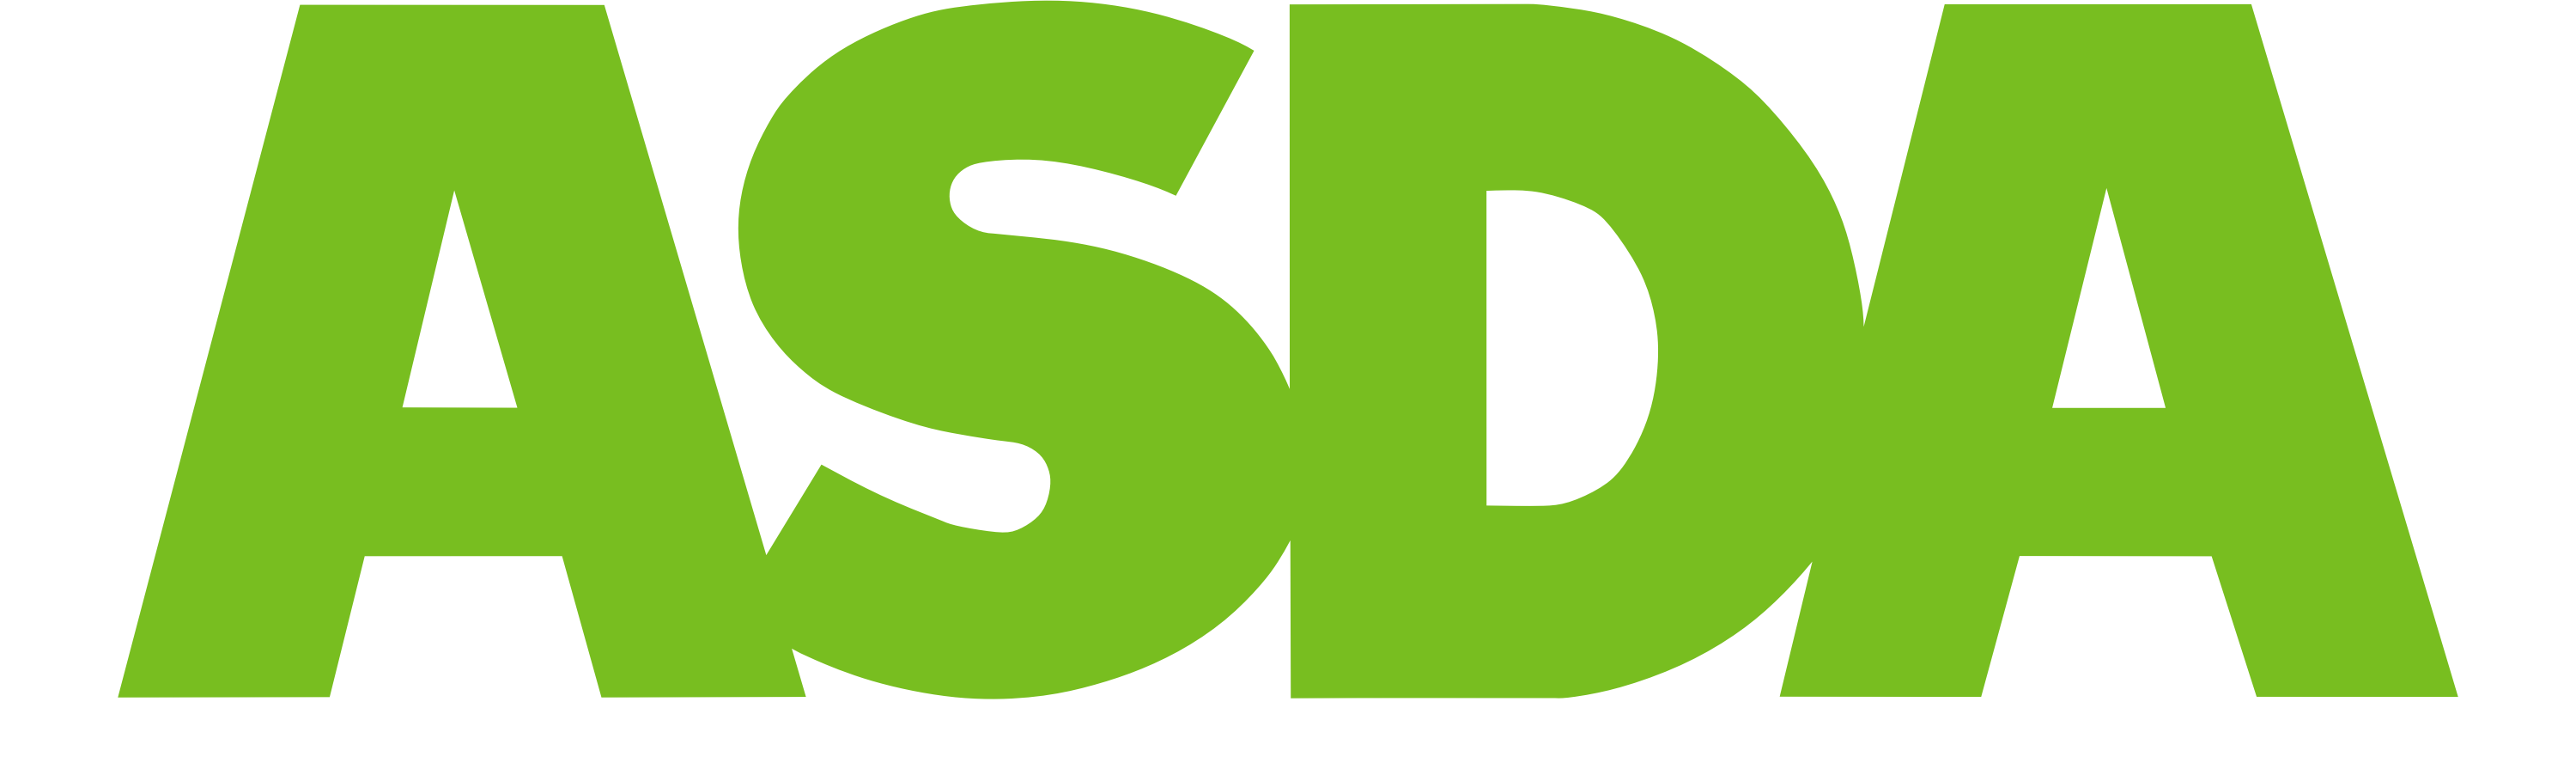 a logo of Tesco supermarket in bright green